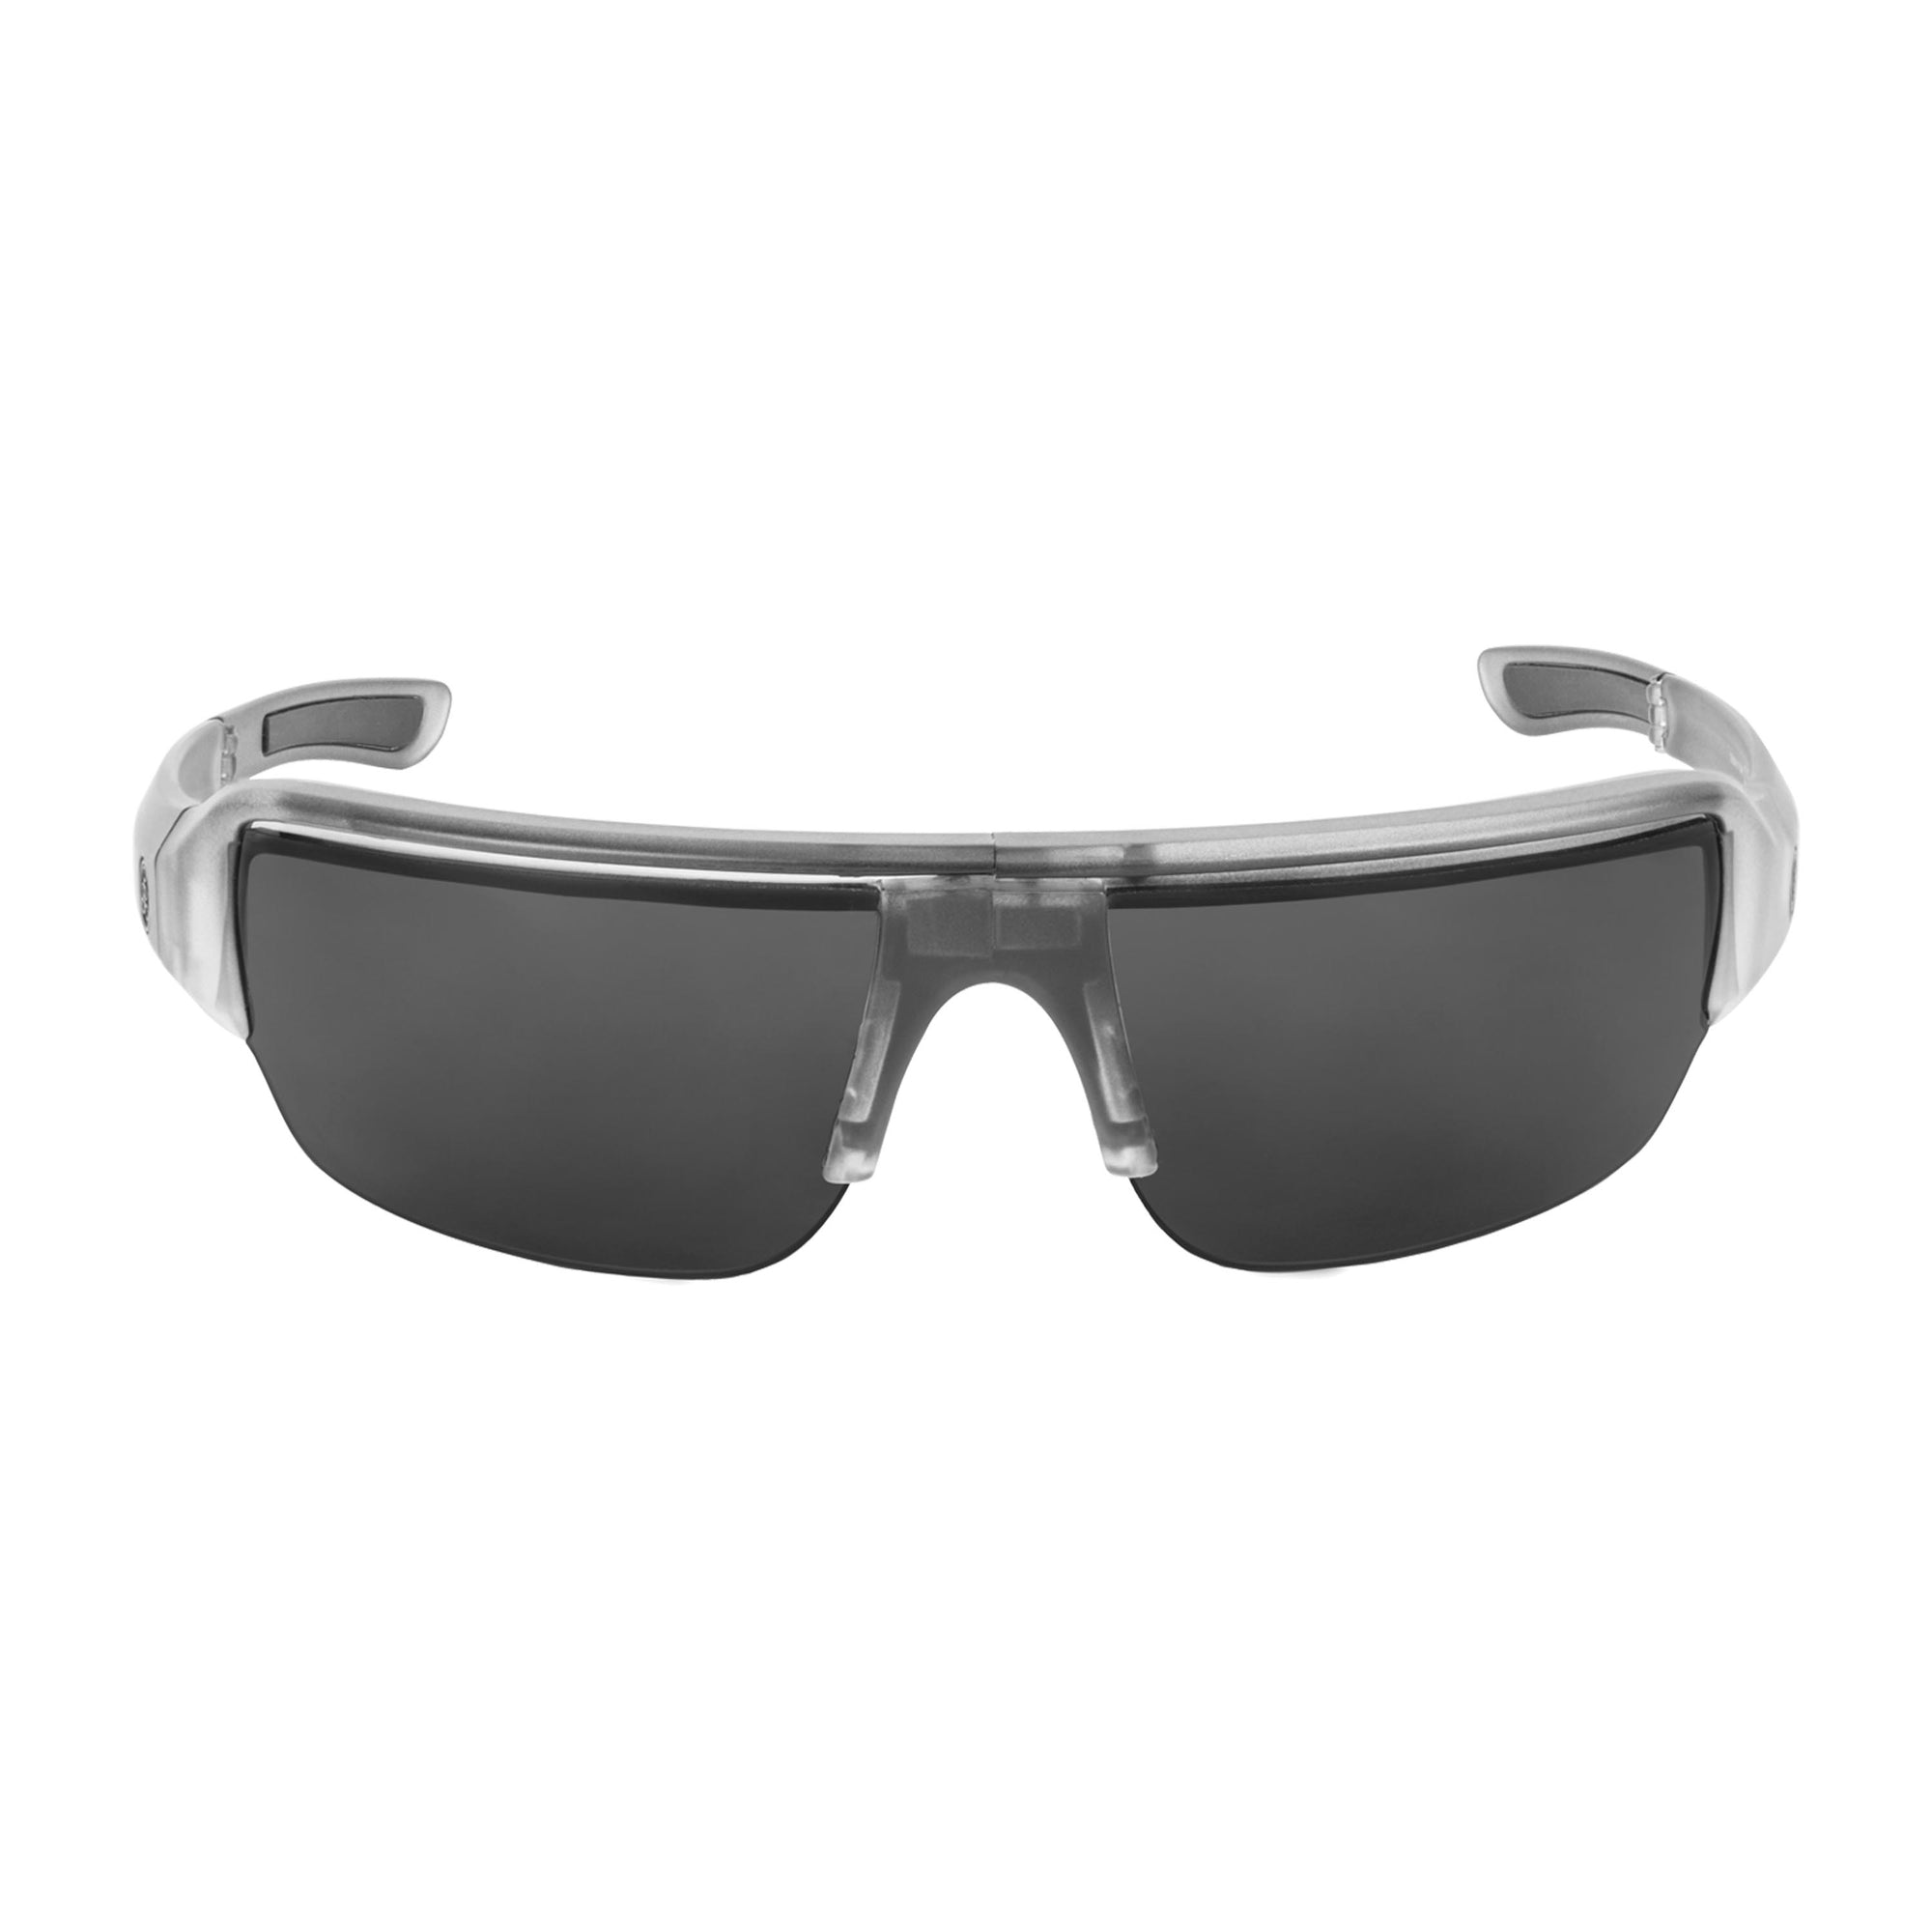 Popticals, Premium Compact Sunglasses, PopGun, 030010-SEGP, Polarized Sunglasses, Matte Smoke/Clear Crystal Frame, Gray Lenses, Front View